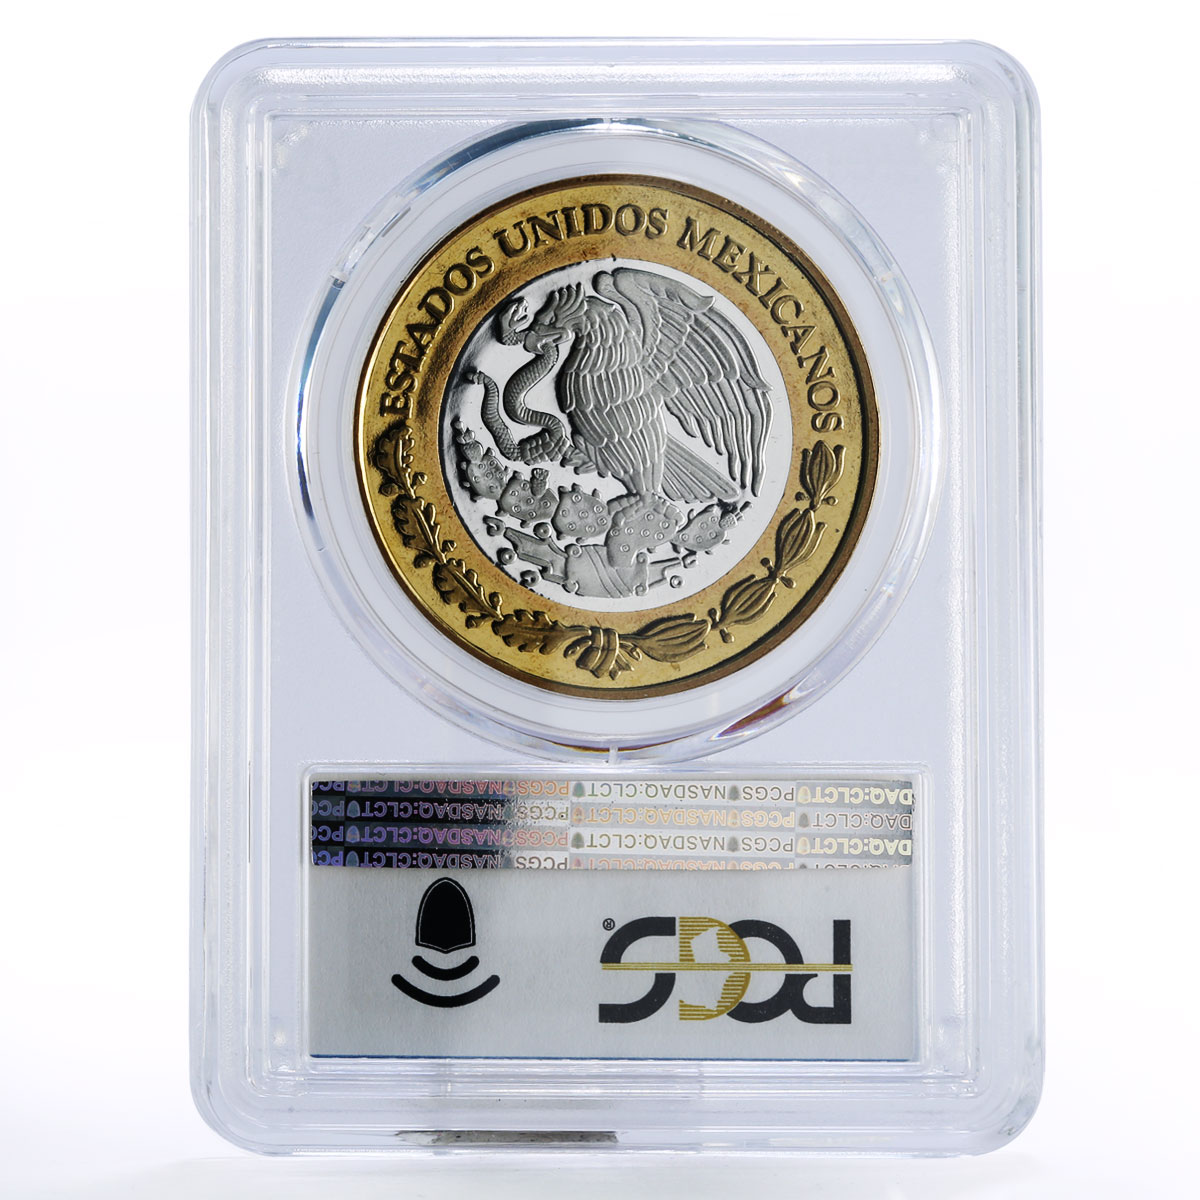 Mexico 100 pesos Numismatic Heritage 1783 Carlos III PL69 PCGS bimetal coin 2011